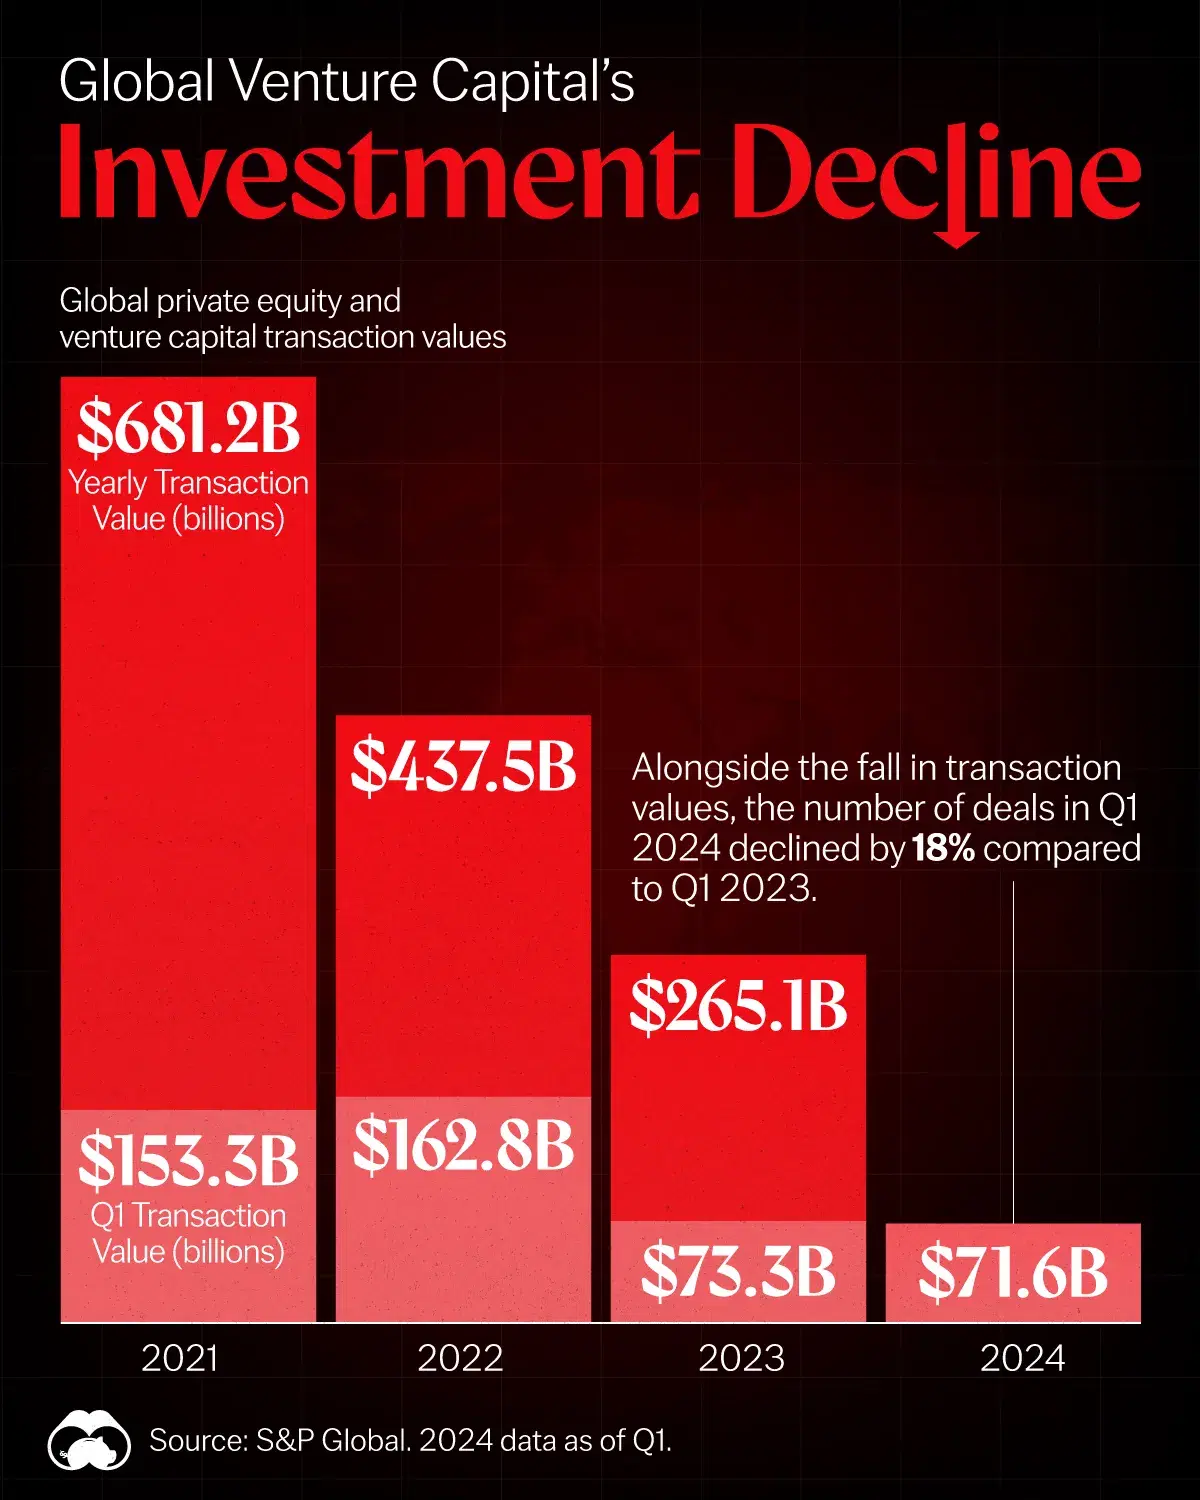 Global Venture Capital's Investment Decline